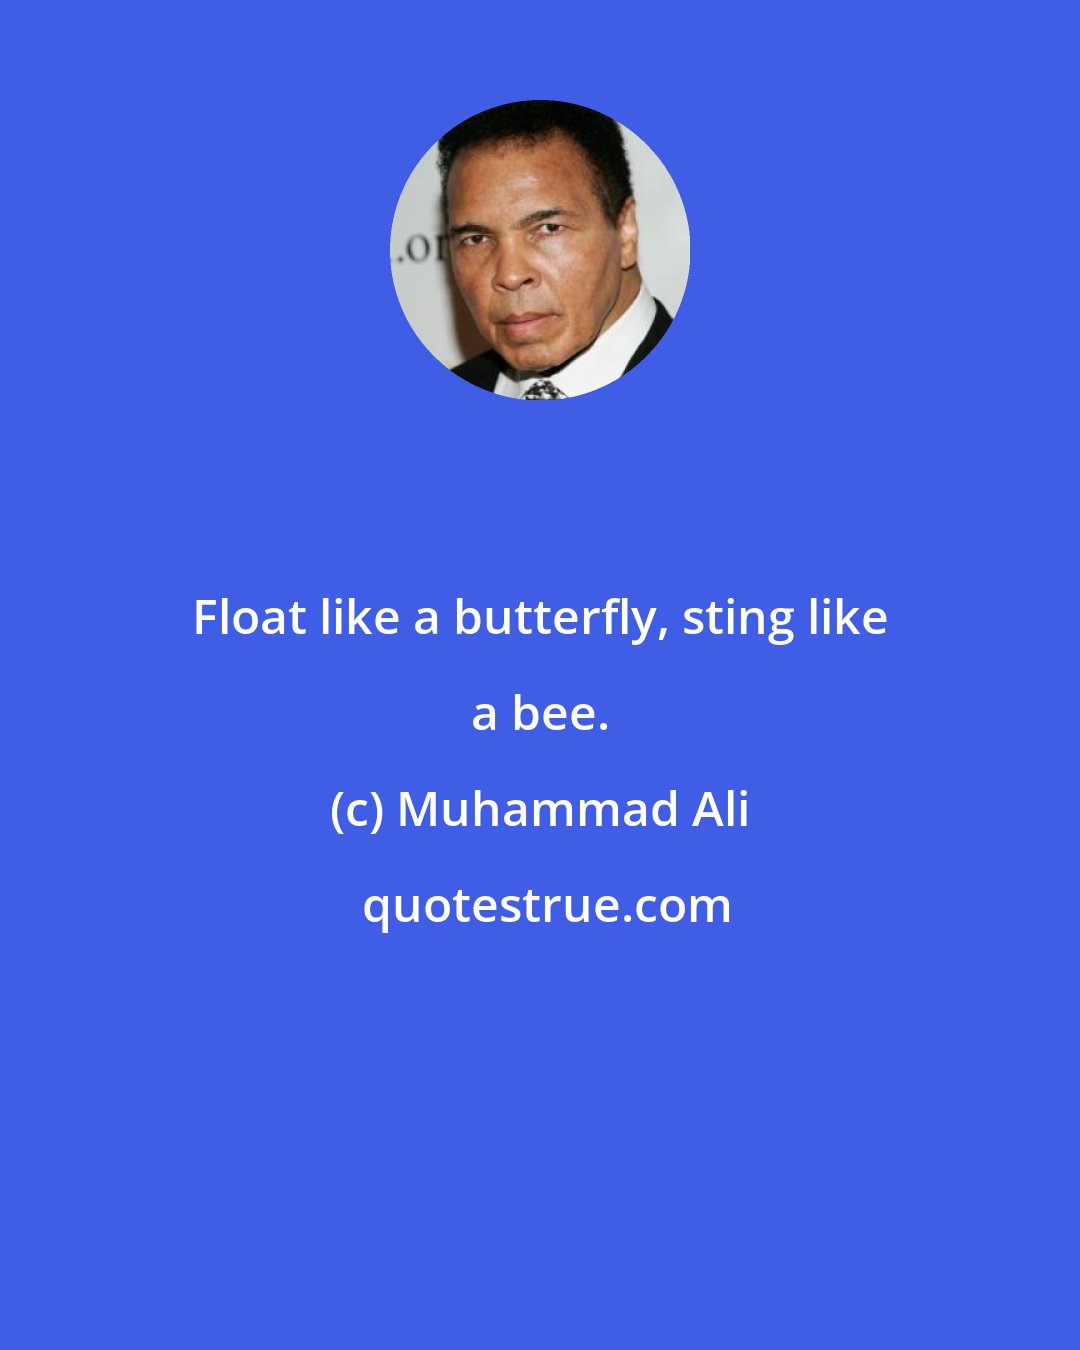 Muhammad Ali: Float like a butterfly, sting like a bee.